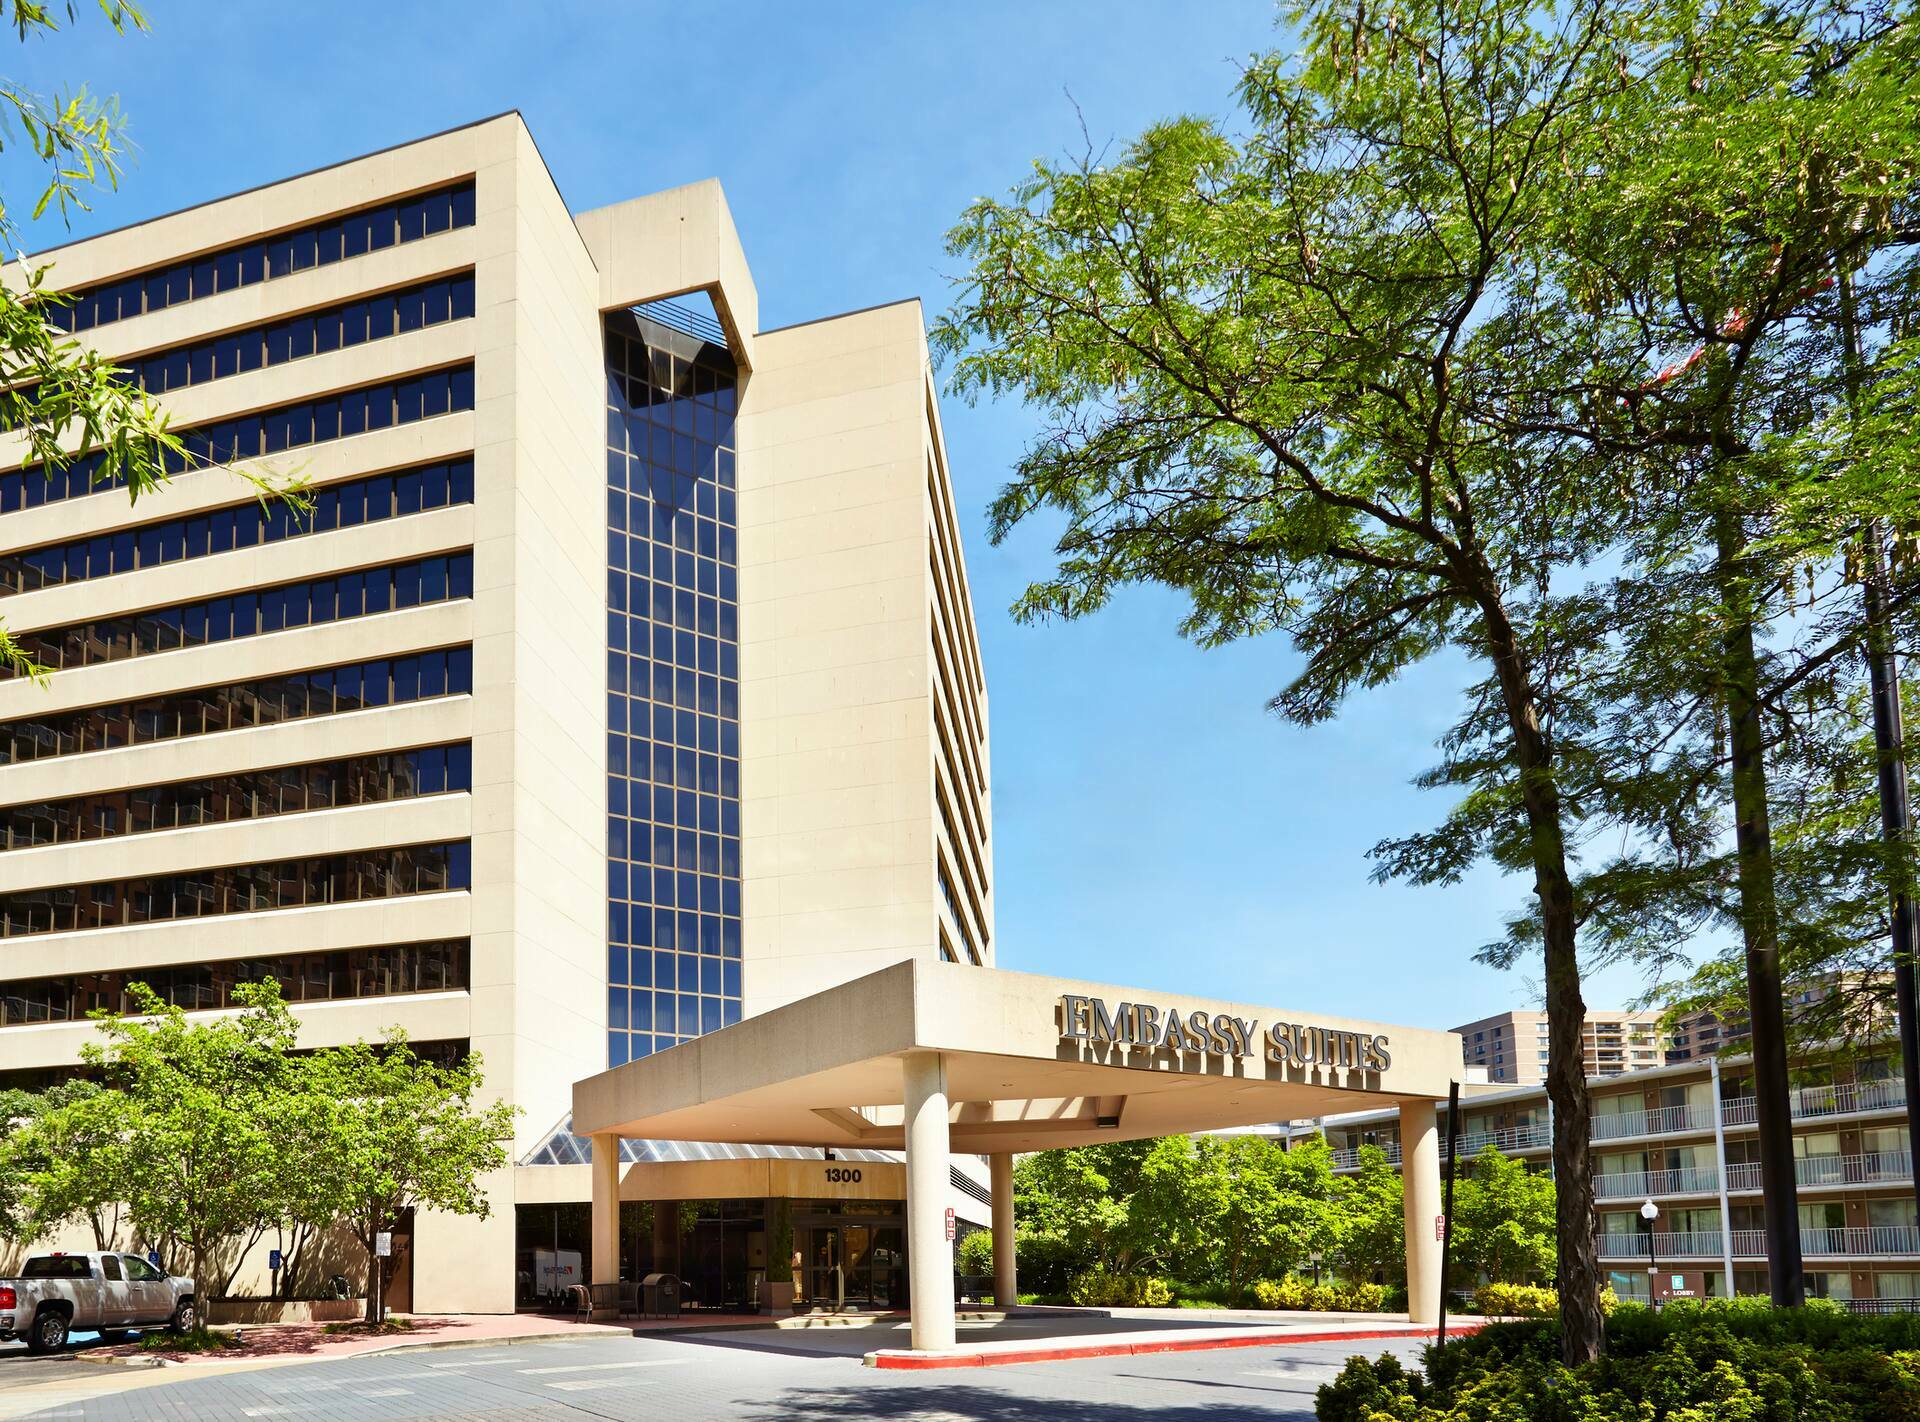 Photo of Embassy Suites by Hilton Crystal City National Airport, Arlington, VA